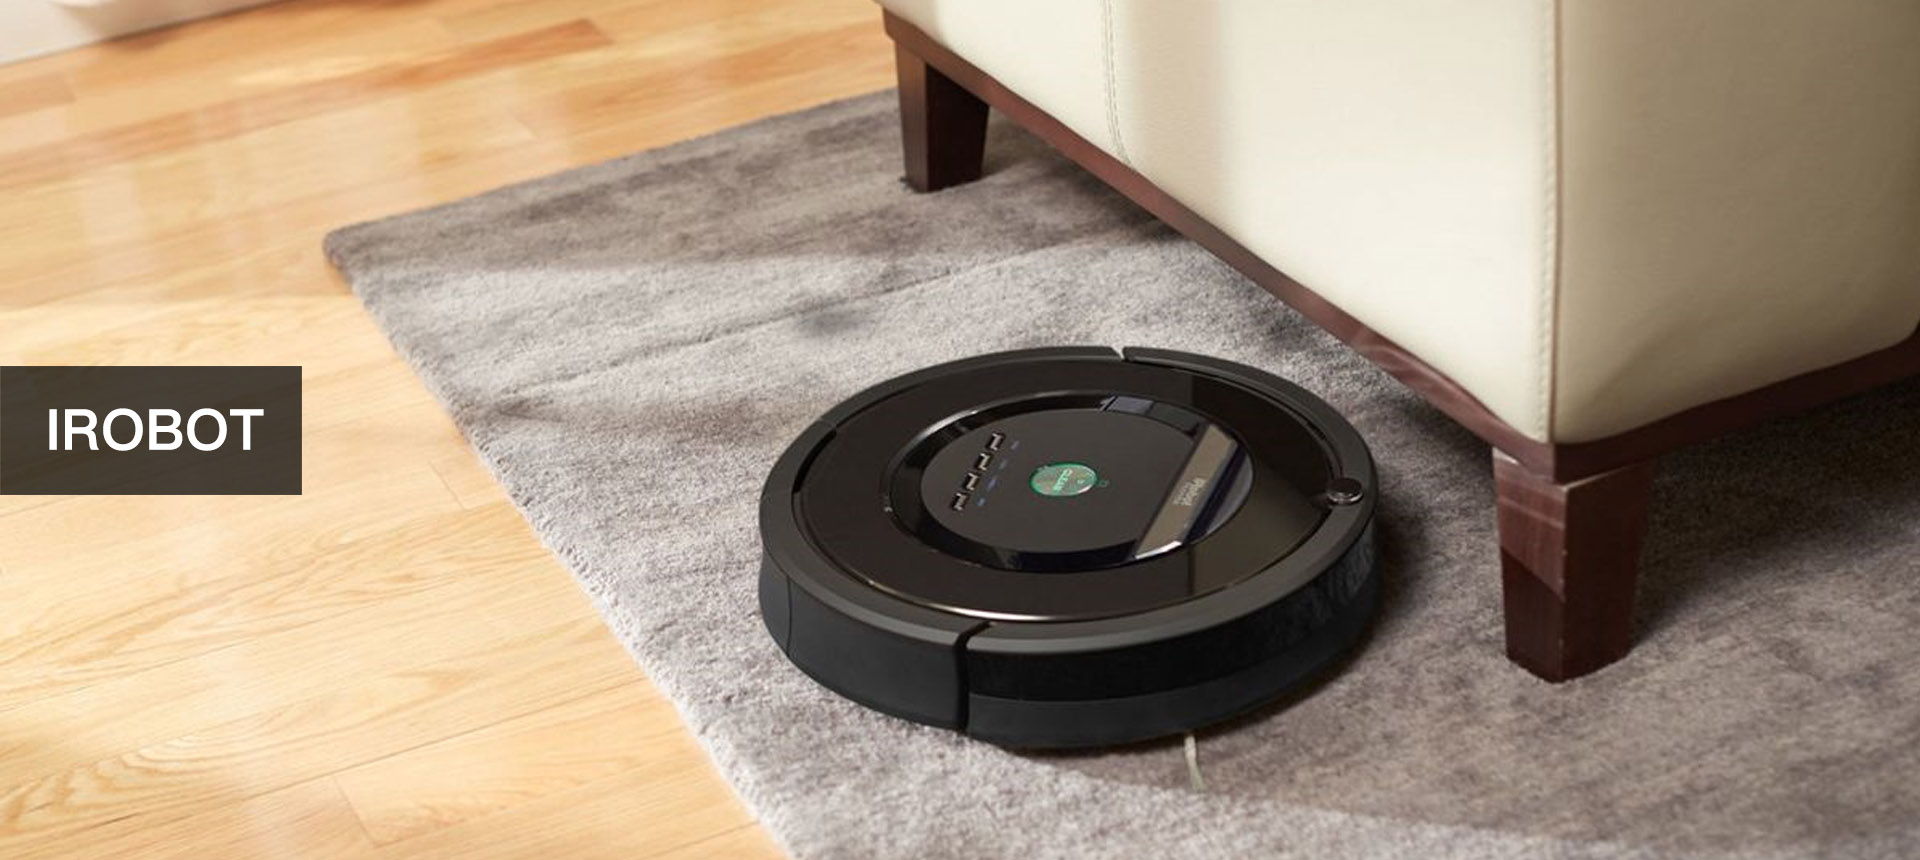 Irobot Robot Vacuum Reviews 2021 Which, Best Roomba Model For Hardwood Floors